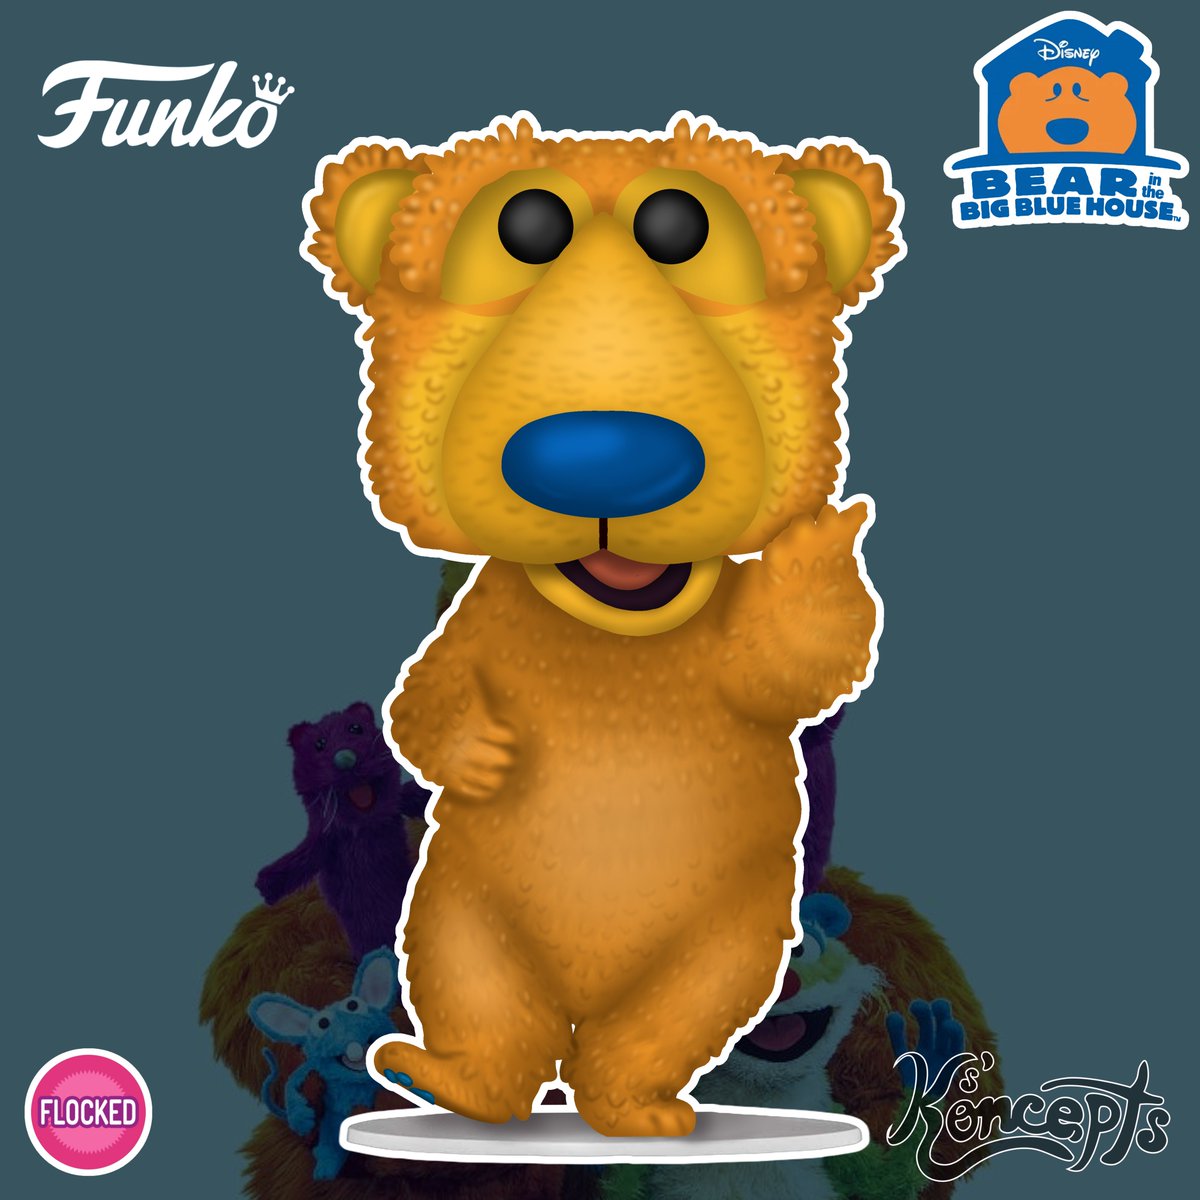 #733 Funko Pop! Box & Pop Concept: Bear (Bear in the Big Blue House)  

#bear #bearinthebigbluehouse #disney #disneyjunior #noelmacneal #funkopopconcept #ksfunkoconcepts

@Casmosss